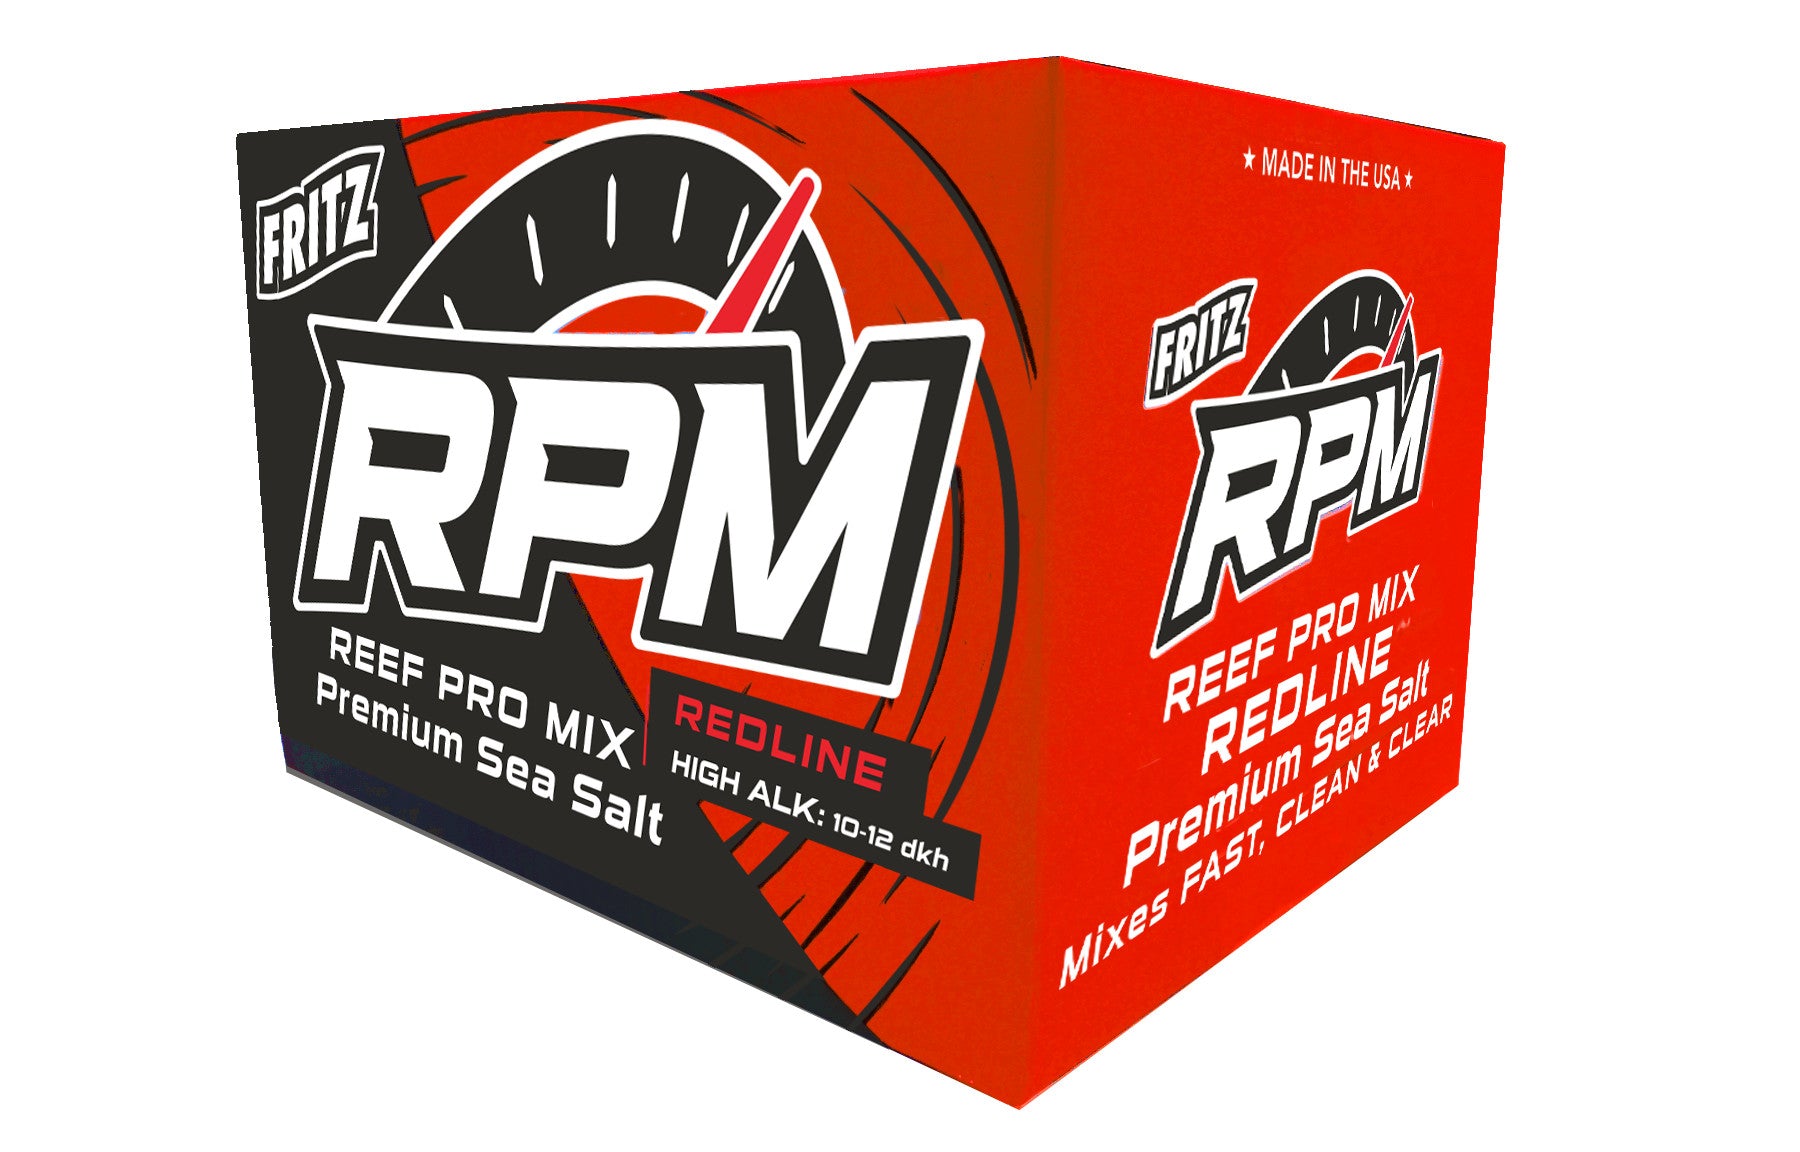 Fritz RPM Redline 55lb for sale | High Alk Complete Marine Salt | Splashy Fish